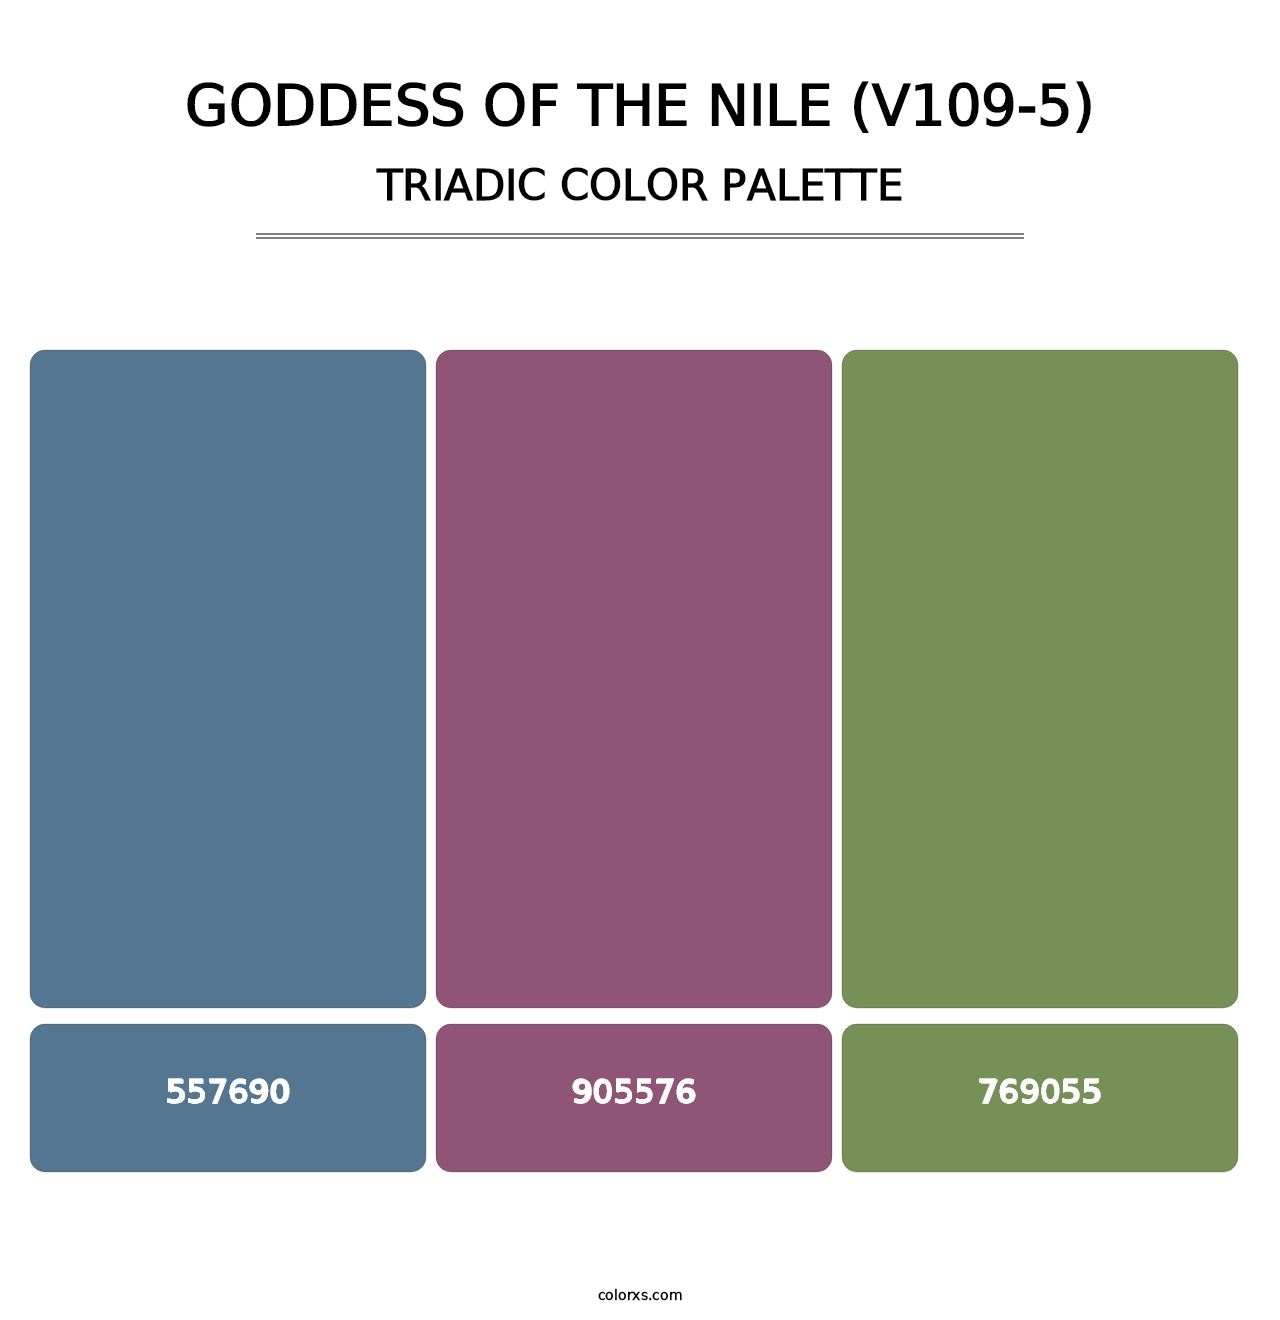 Goddess of the Nile (V109-5) - Triadic Color Palette